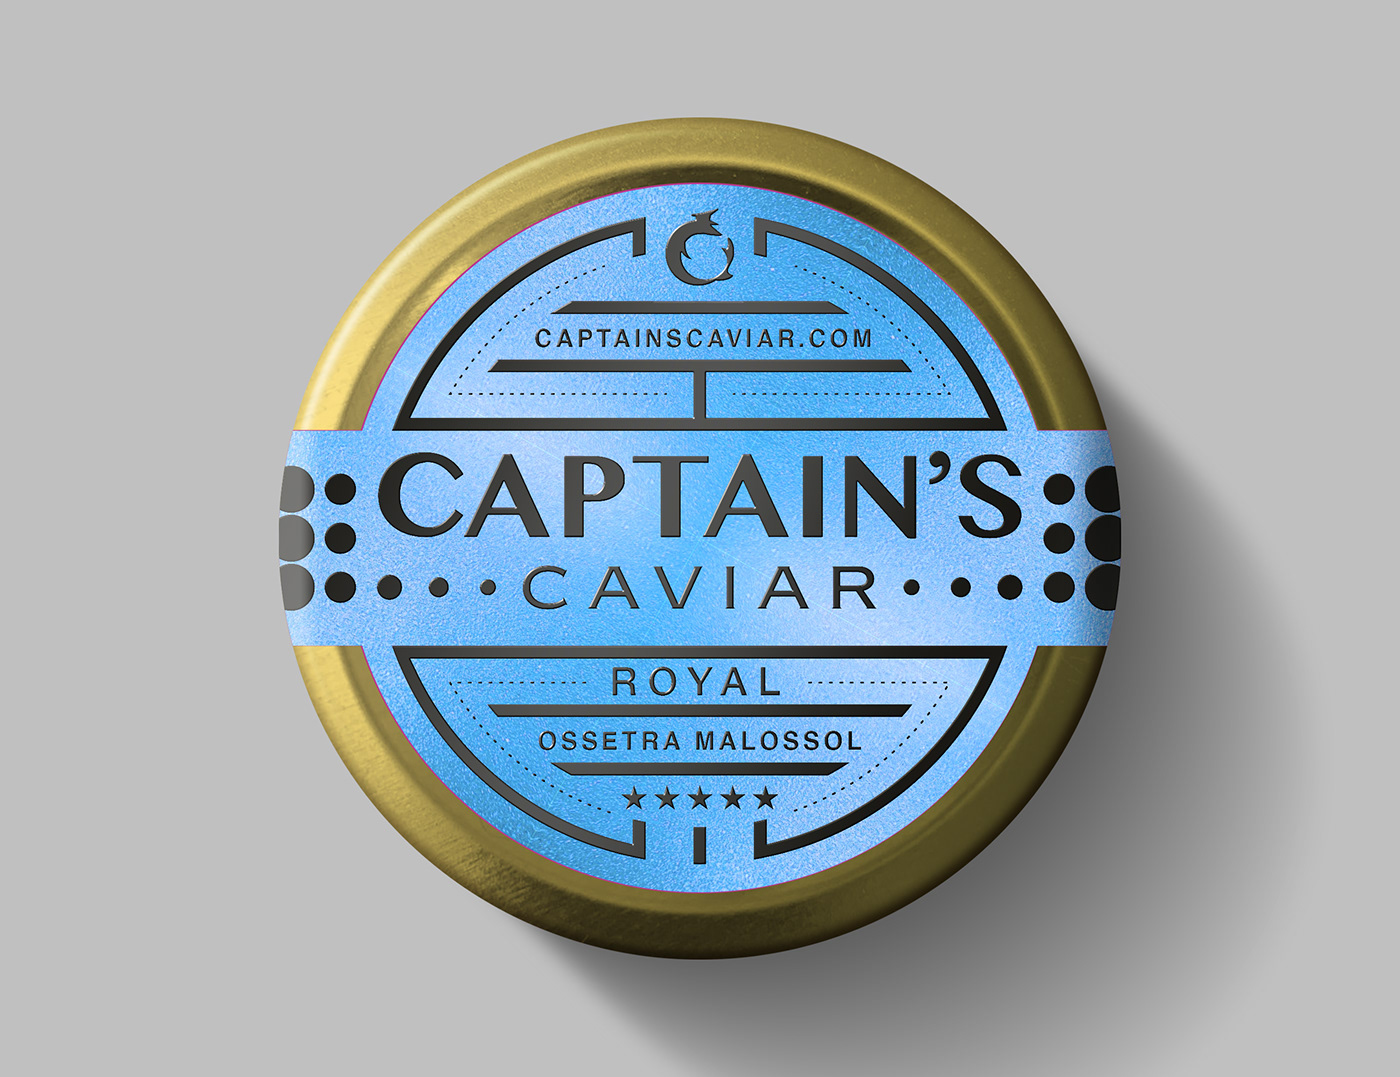 Black Caviar caviar Label luxury Packaging packaging design royal sturgeon sturgeon caviar